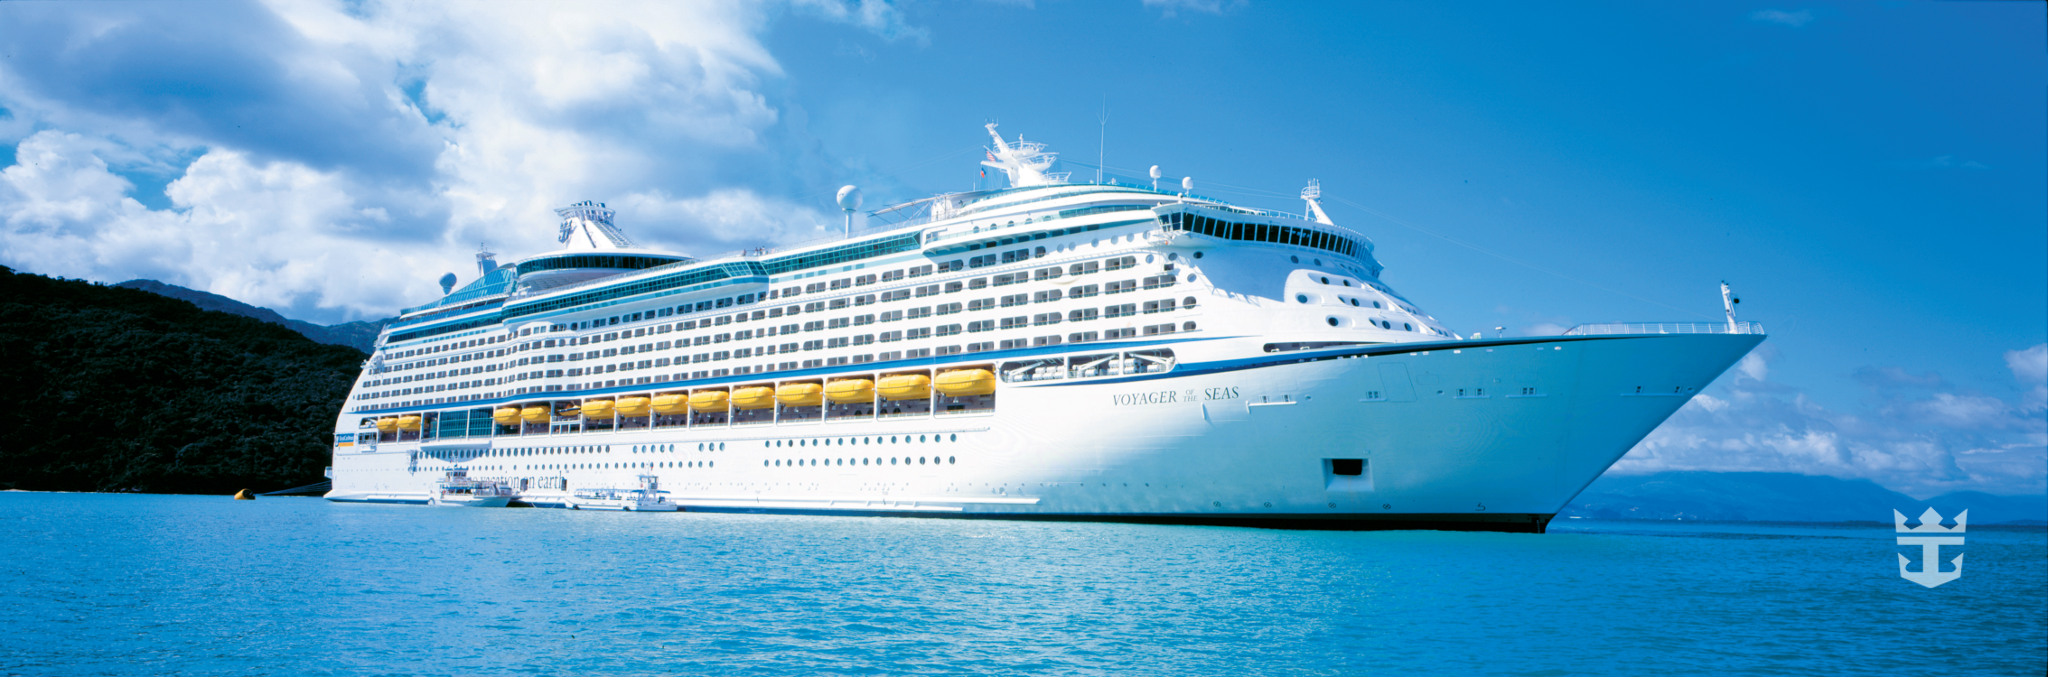 Queensland Cruise